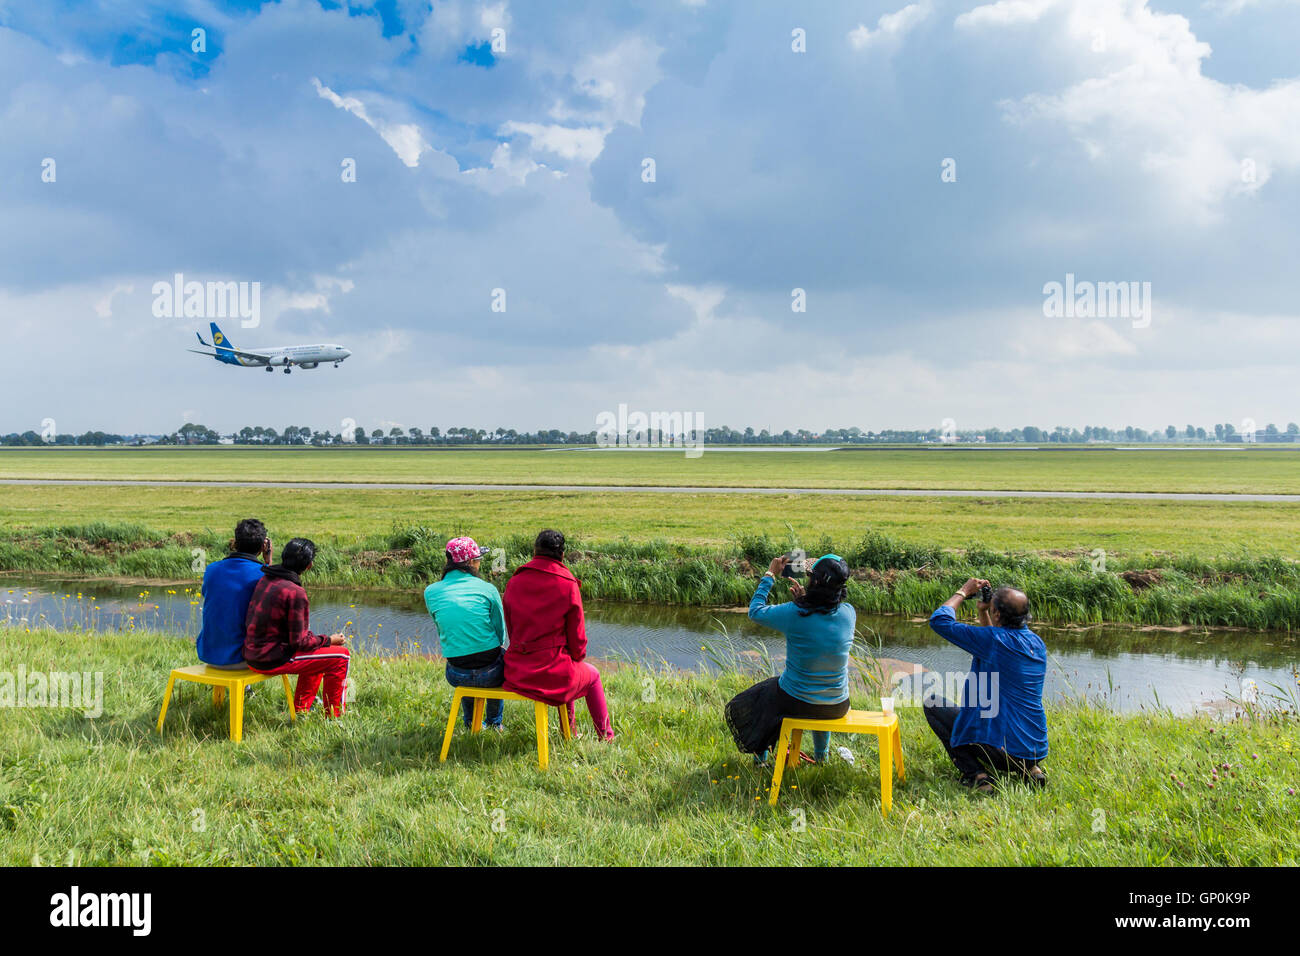 Polderbaan Vijfhuizen, die Niederlande - 20. August 2016: Familie Flugzeugbeobachter Passagierjet Land beobachten Stockfoto